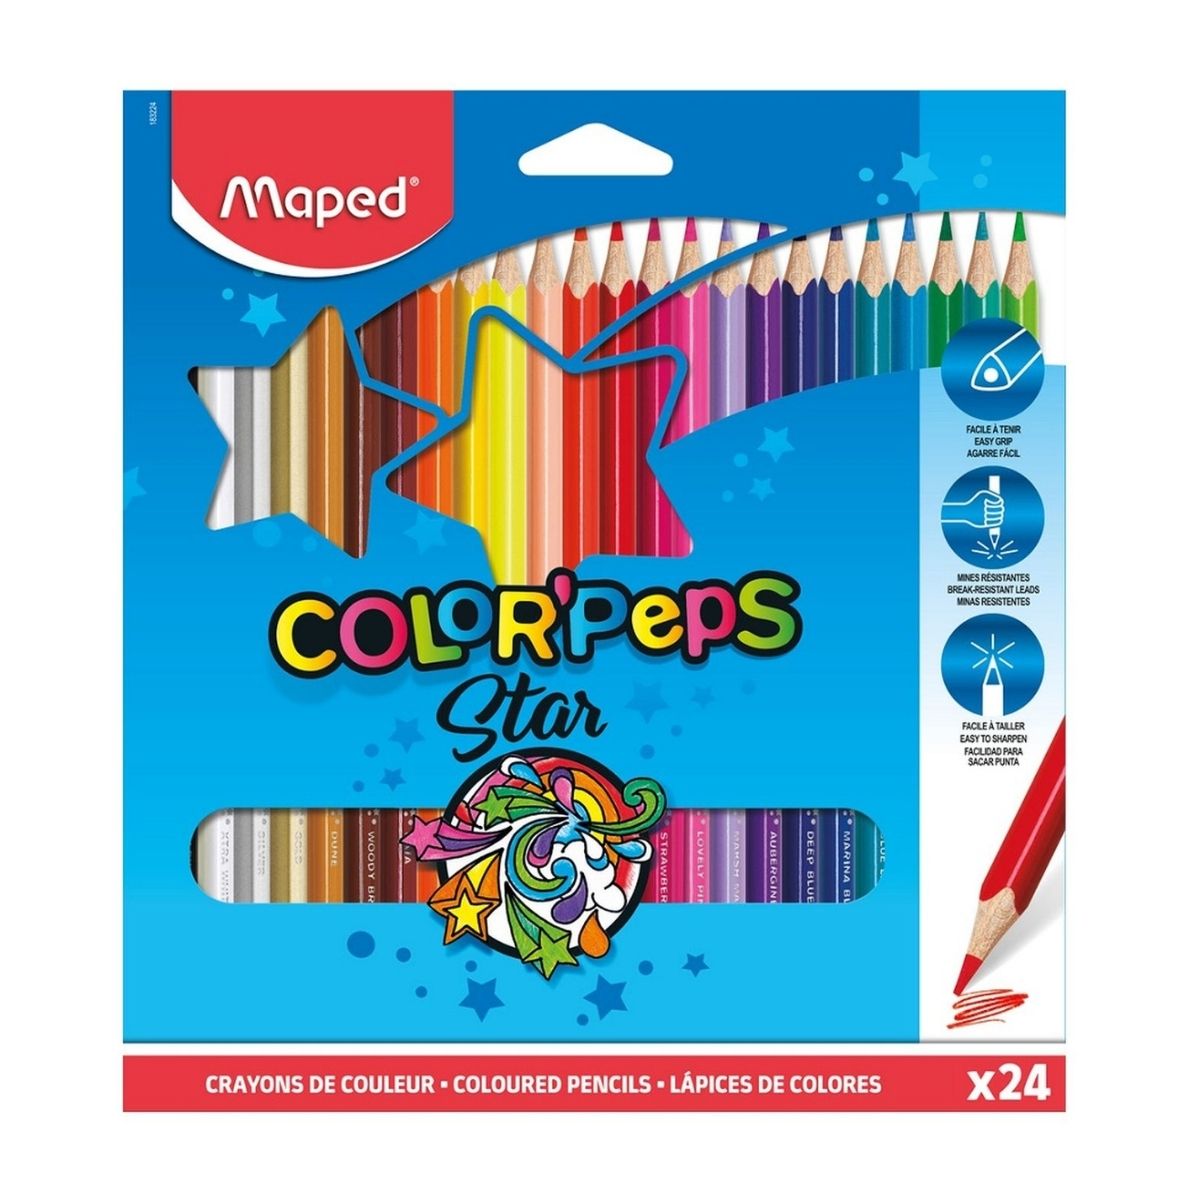 Drvene bojice 24 MAPED Color peps 